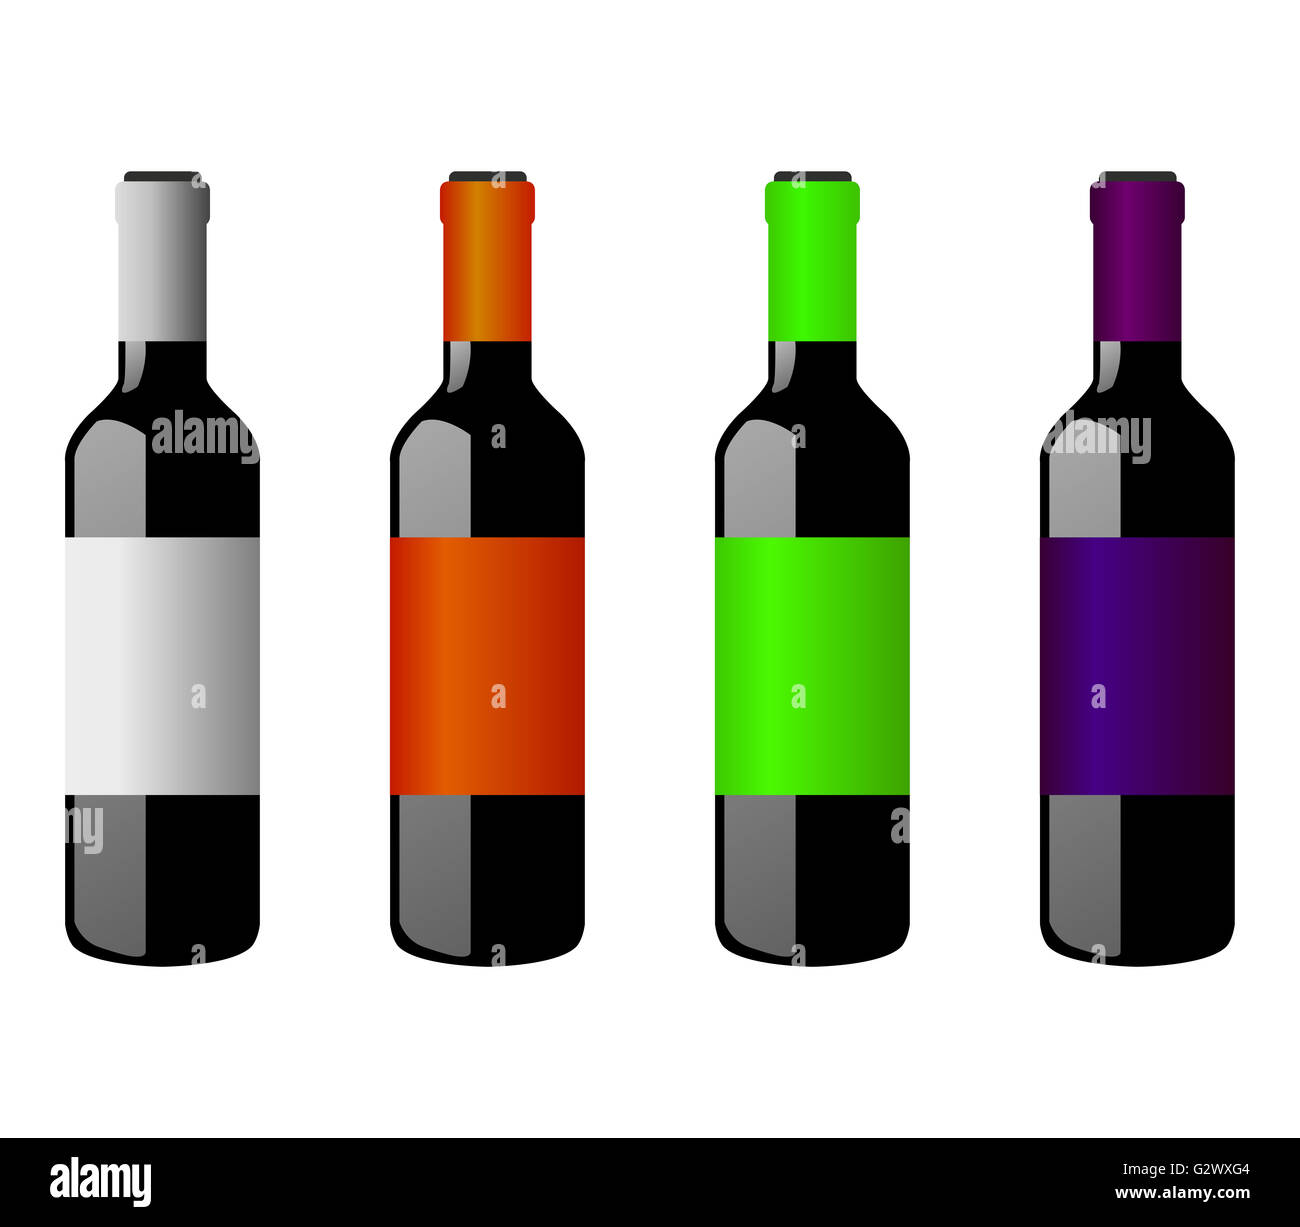 bottles of wine Stock Photo